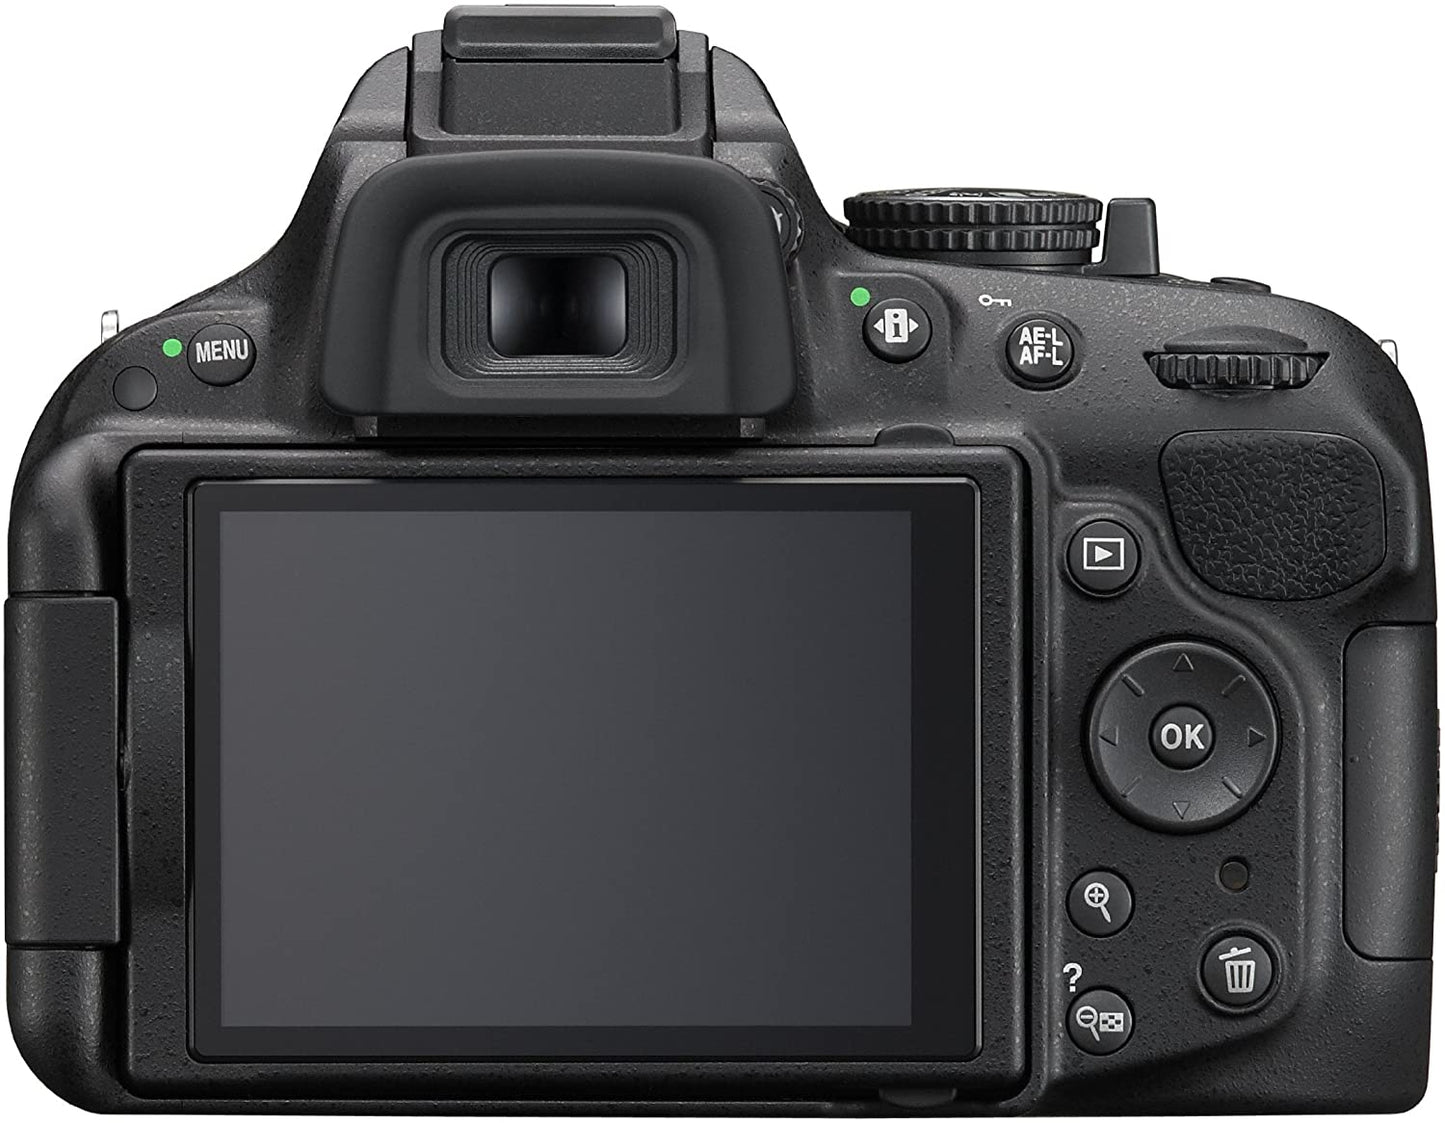 (Use) Nikon D5200 24.1 MP CMOS Digital SLR Camera Body Only (Black)